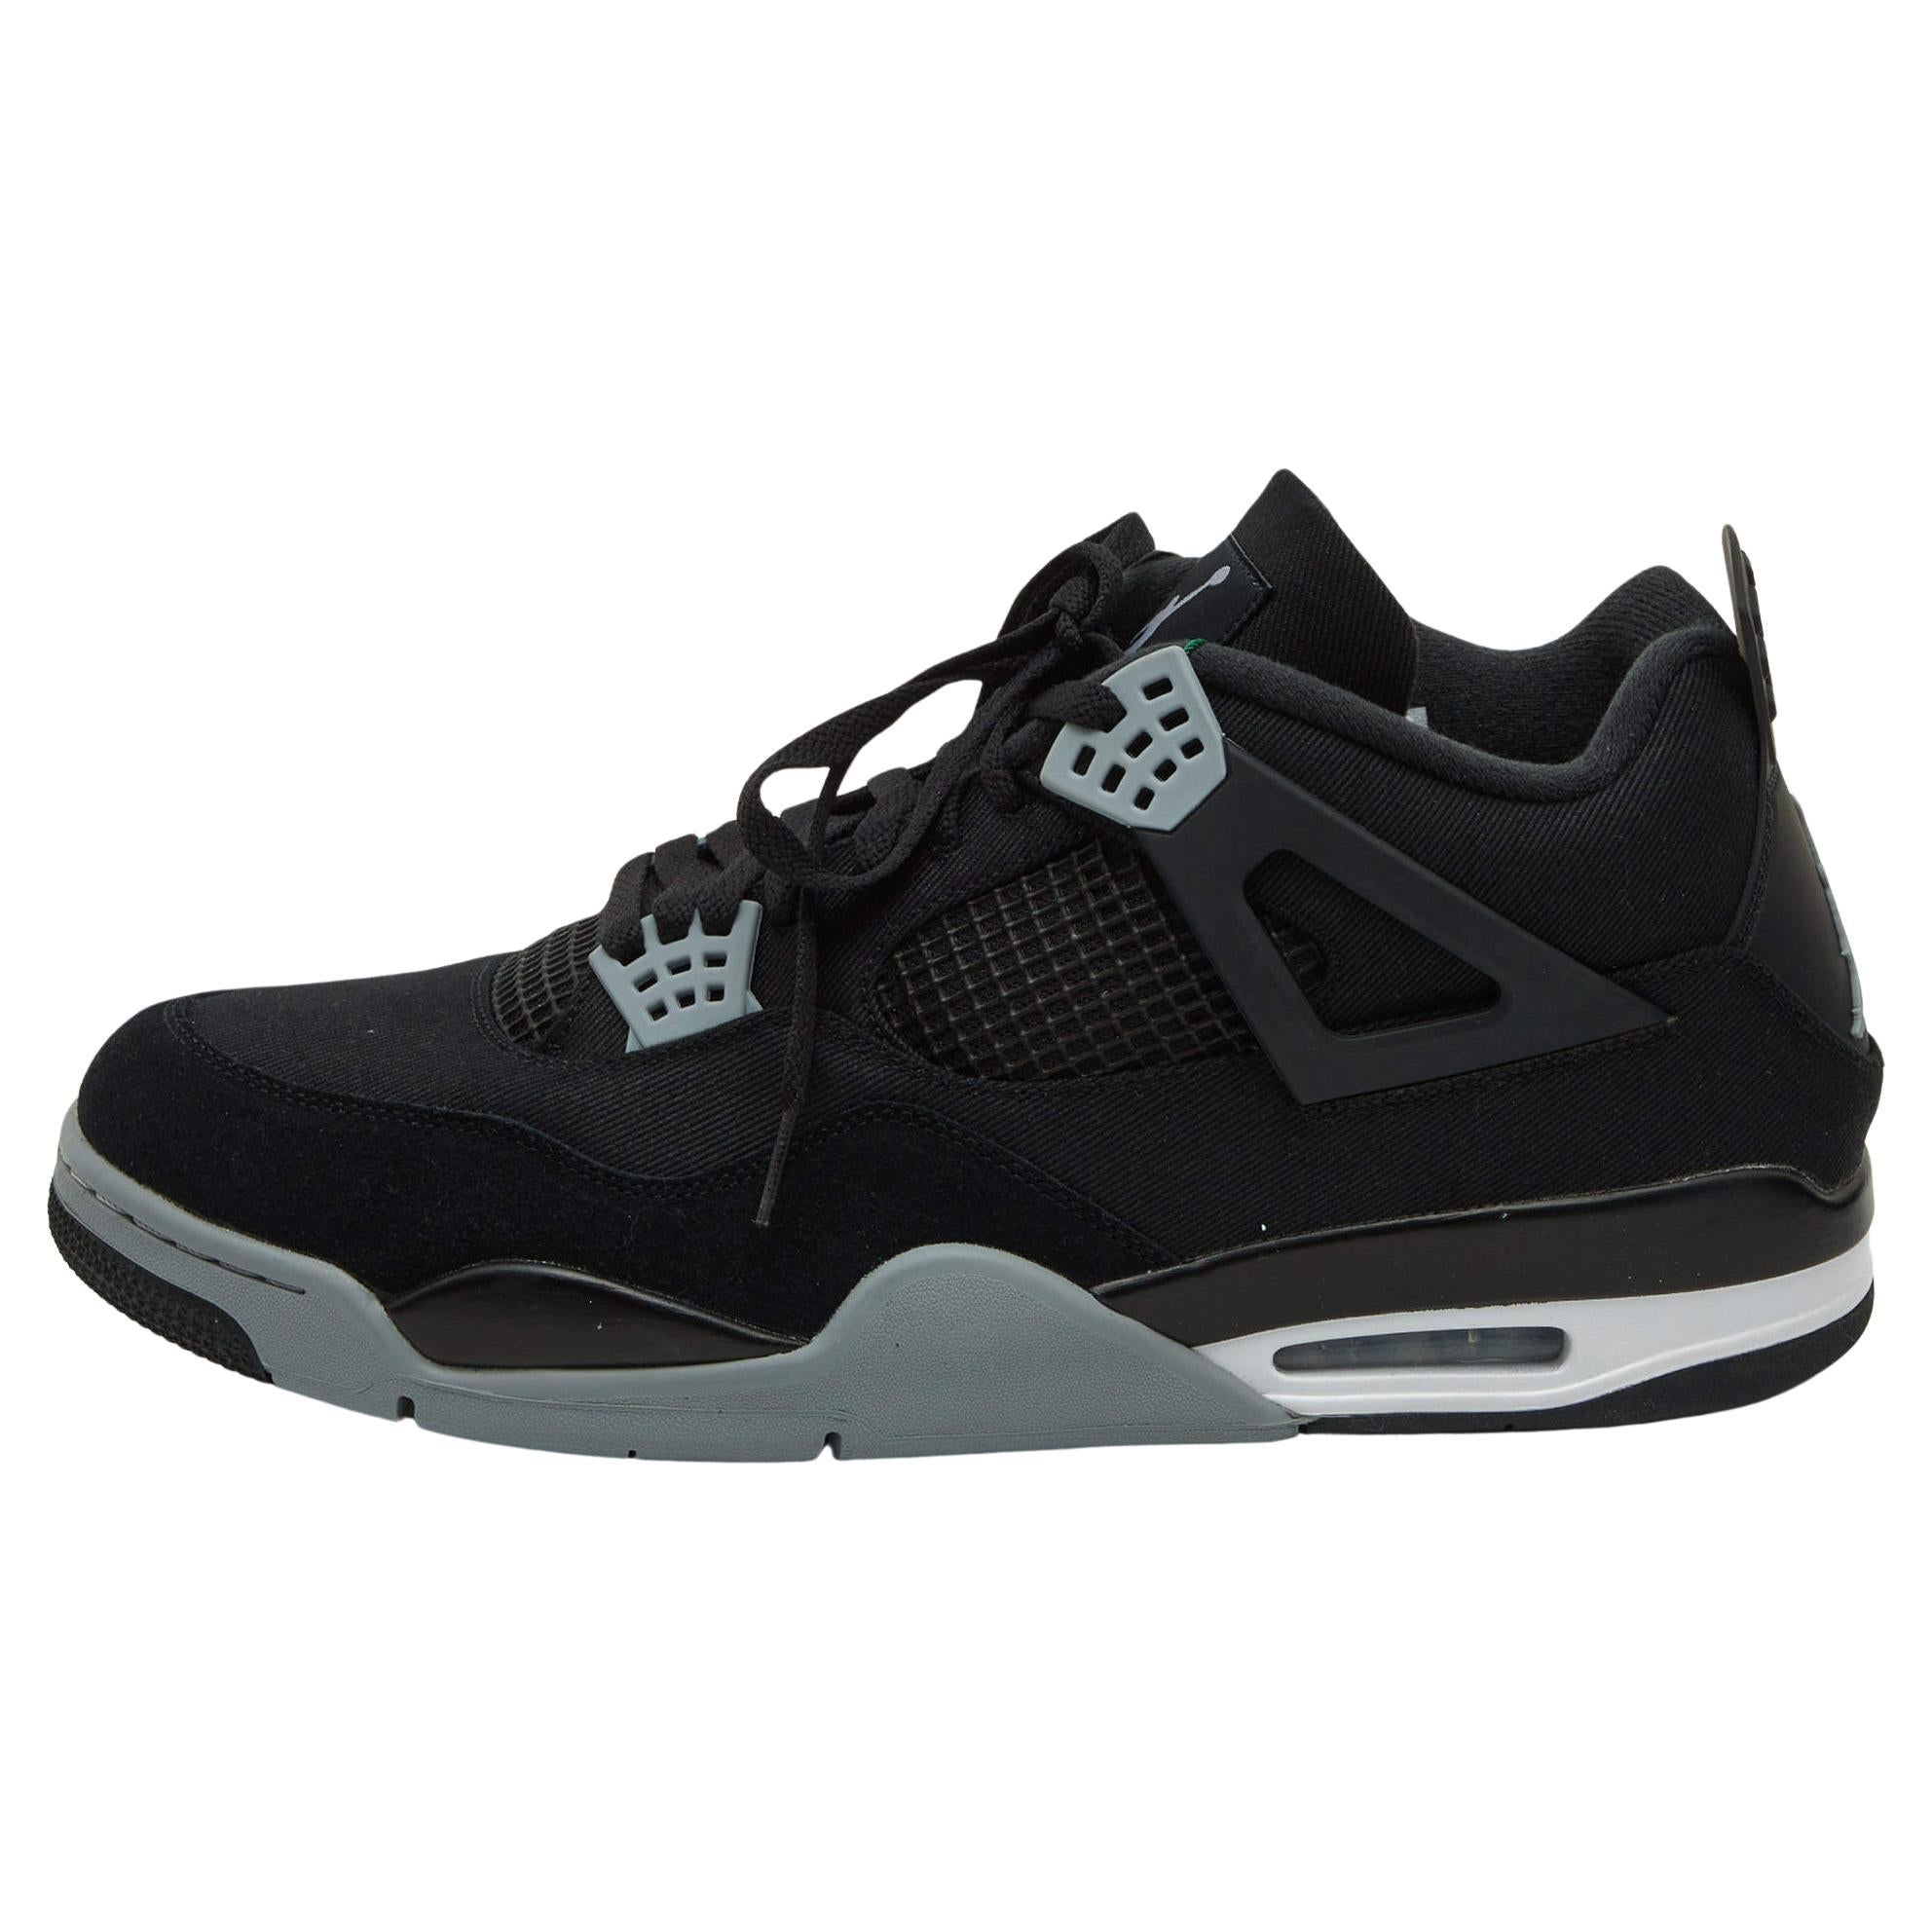 Air Jordans Black Canvas and Suede Jordan 4 Retro Sneakers Size 50.5